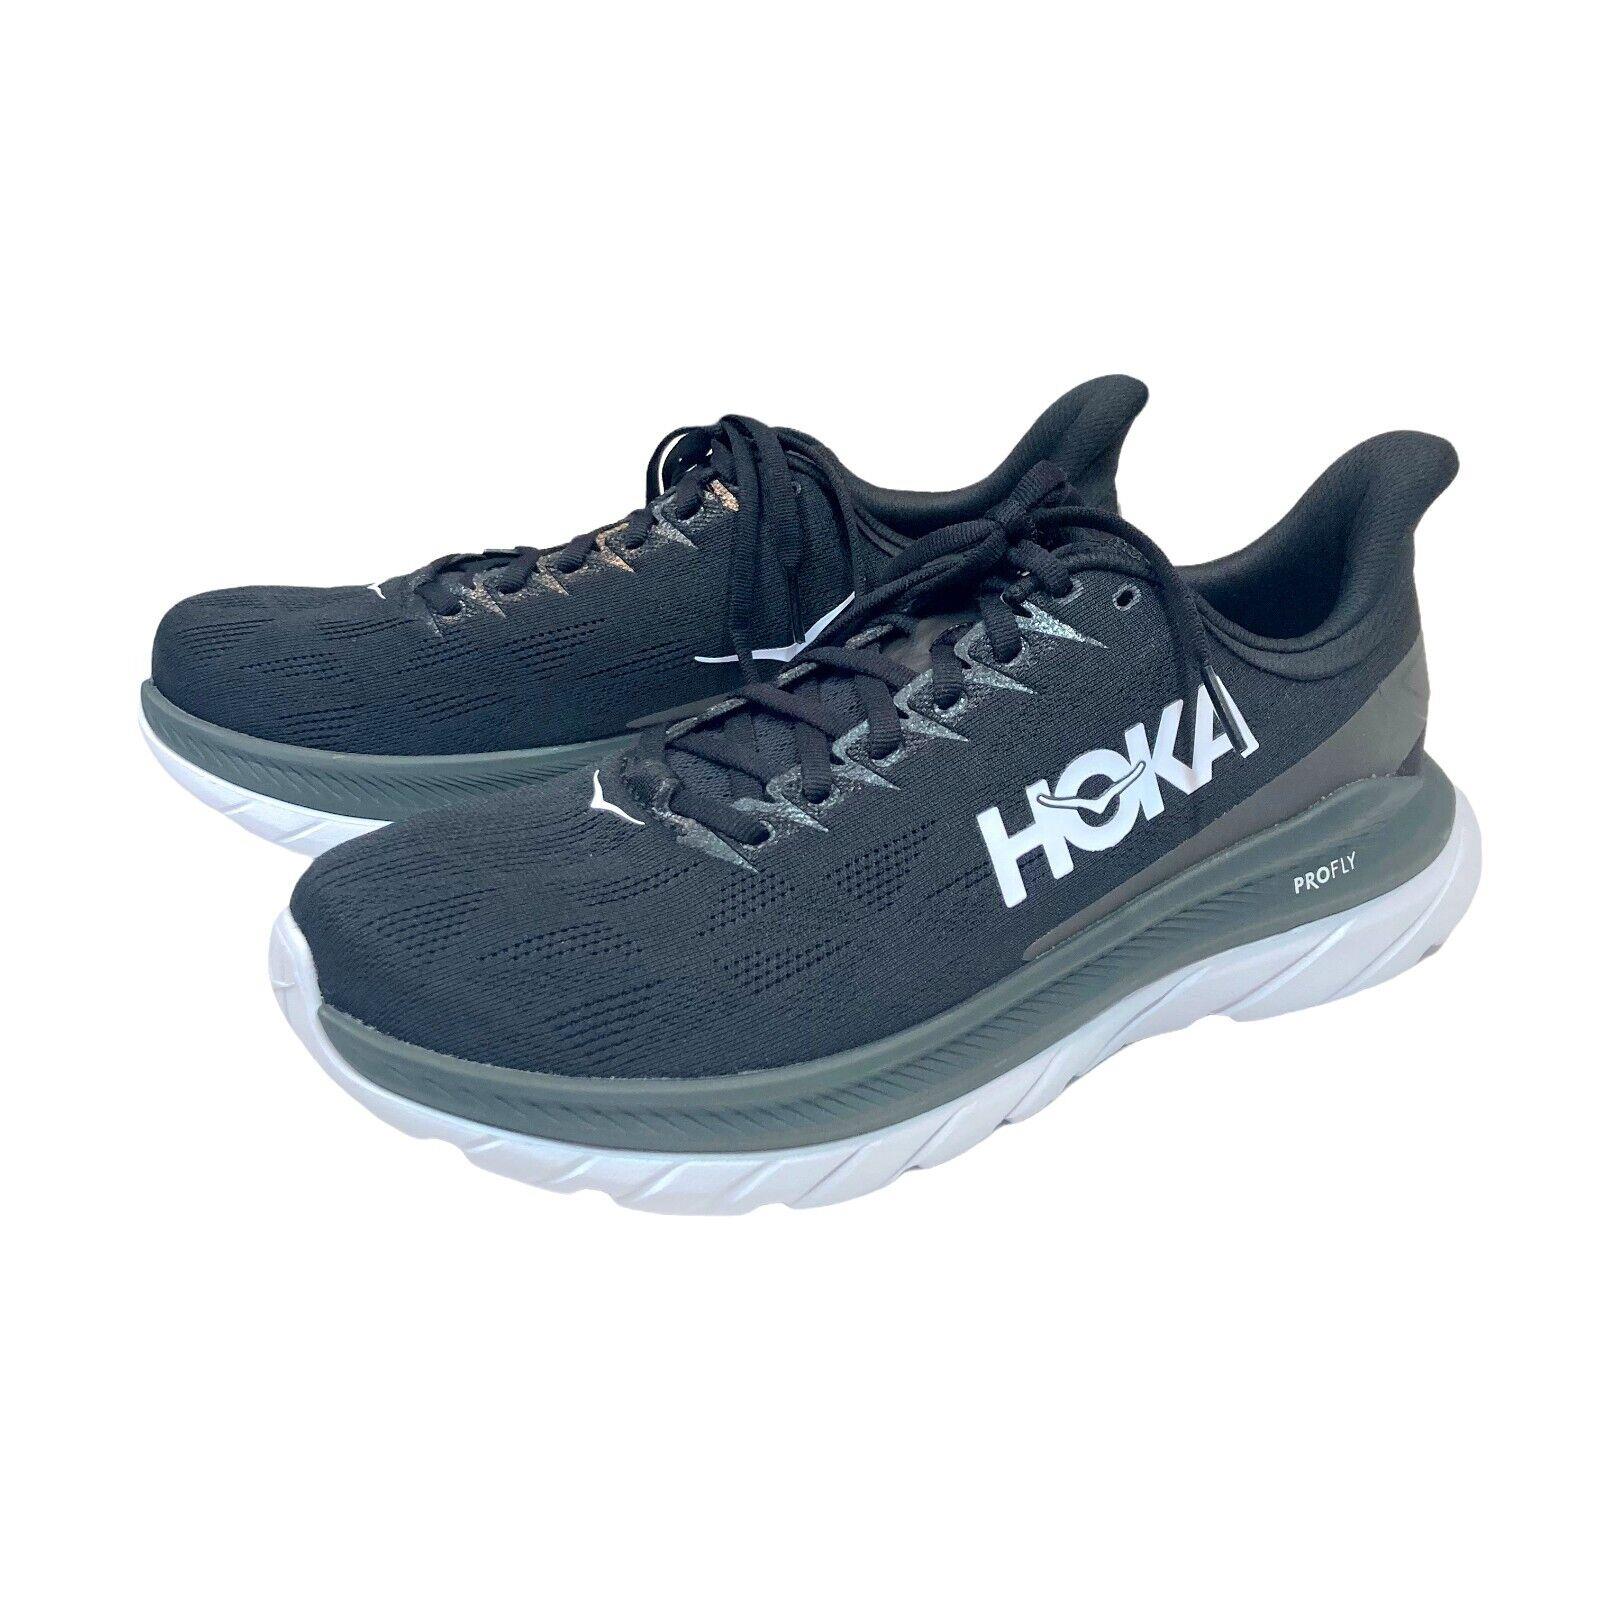 Hoka Mach 4 Shoes 1113529 Bsd Black Womens 10.5 B